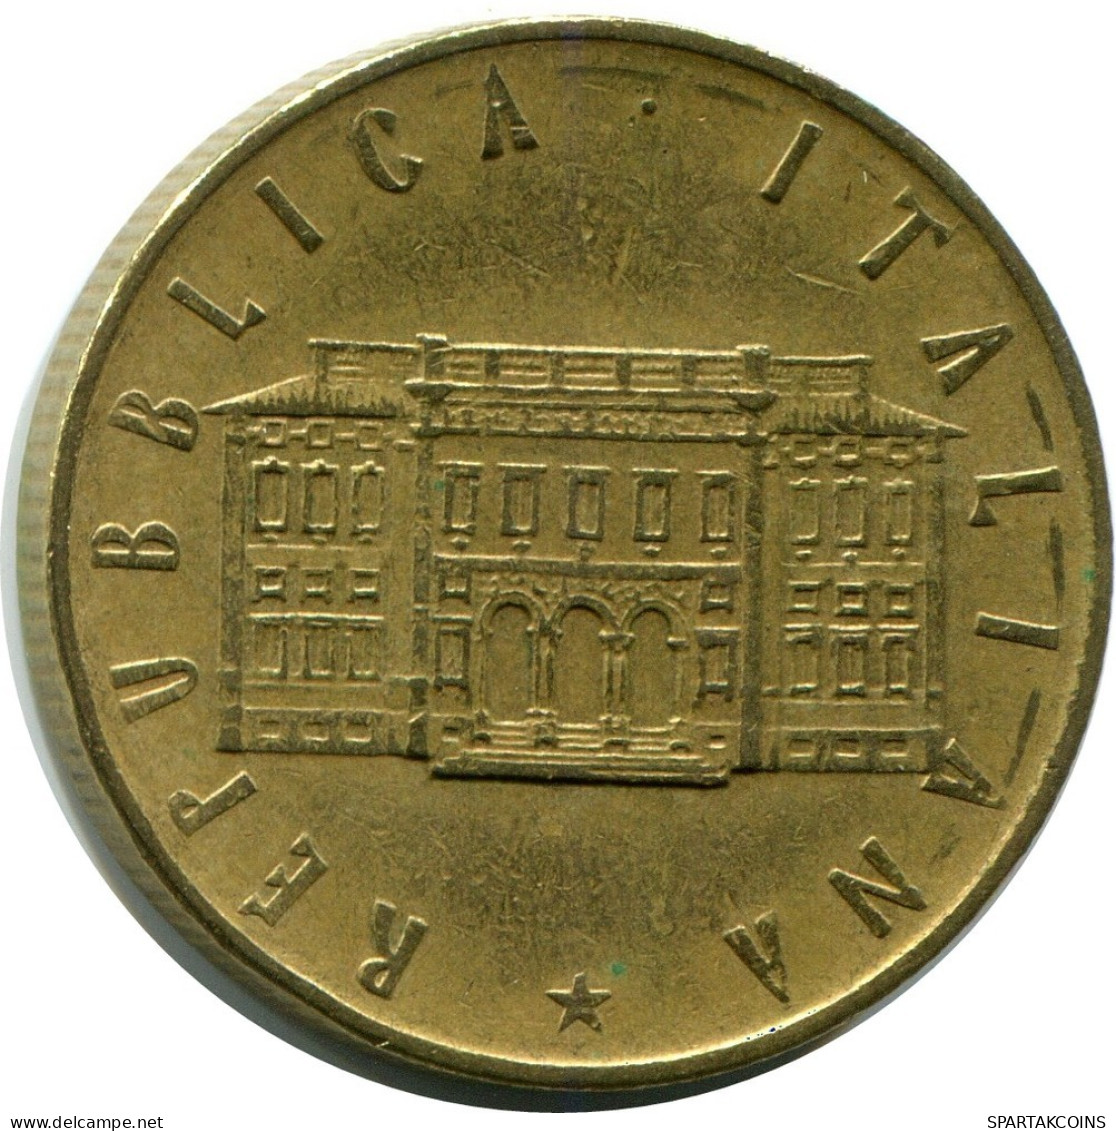 200 LIRE 1981 ITALY Coin #AZ543.U.A - 200 Lire